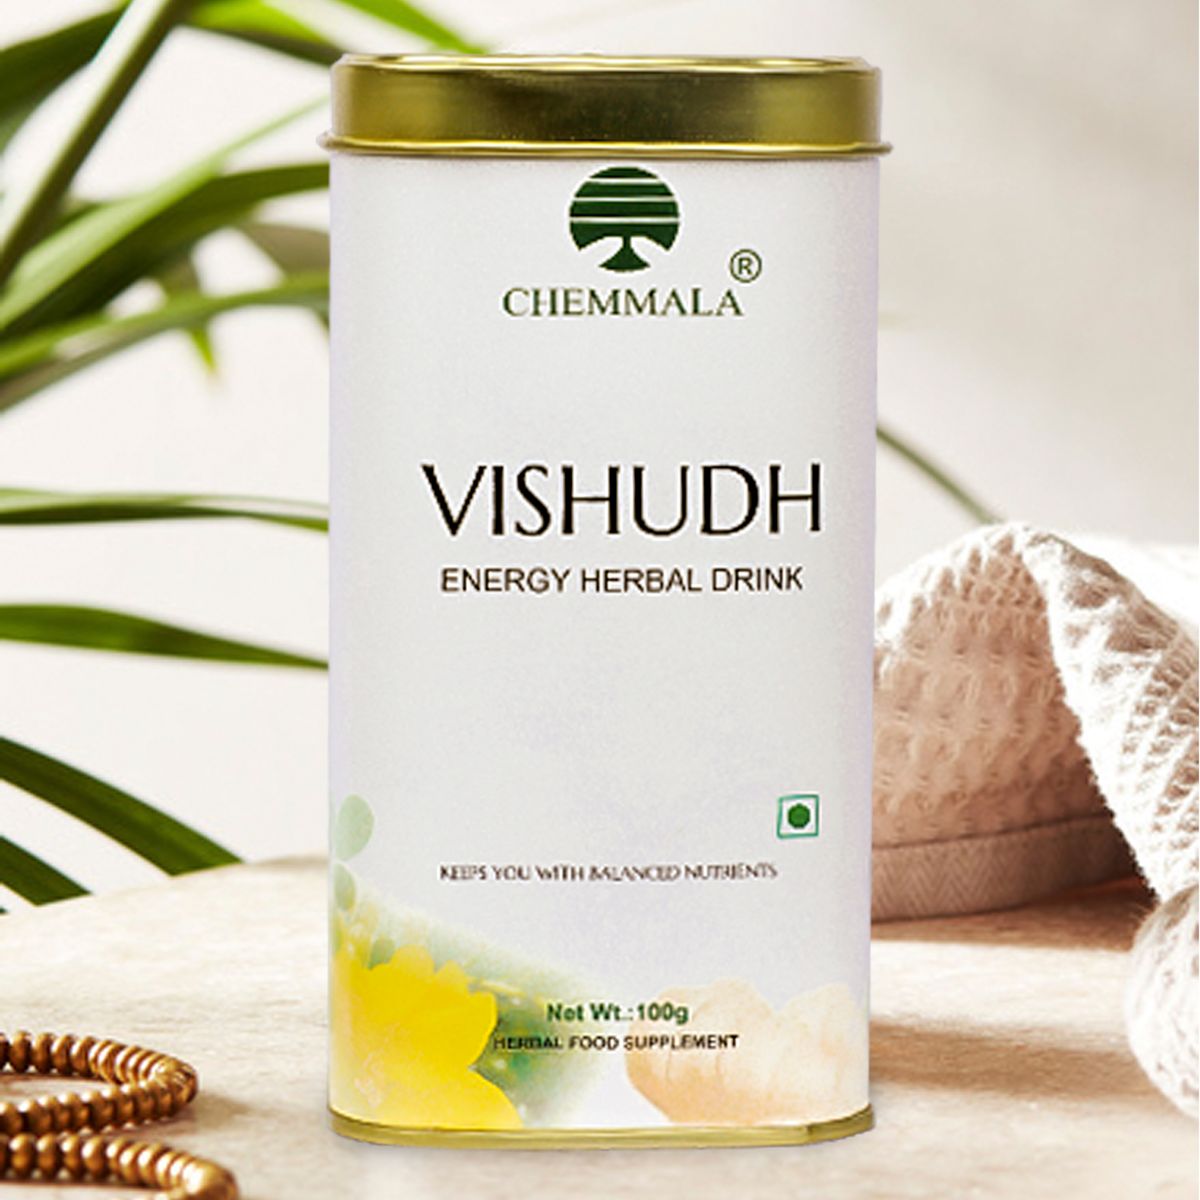 Chemmala Vishudh Energy Herbal Drink - hfnl!fe